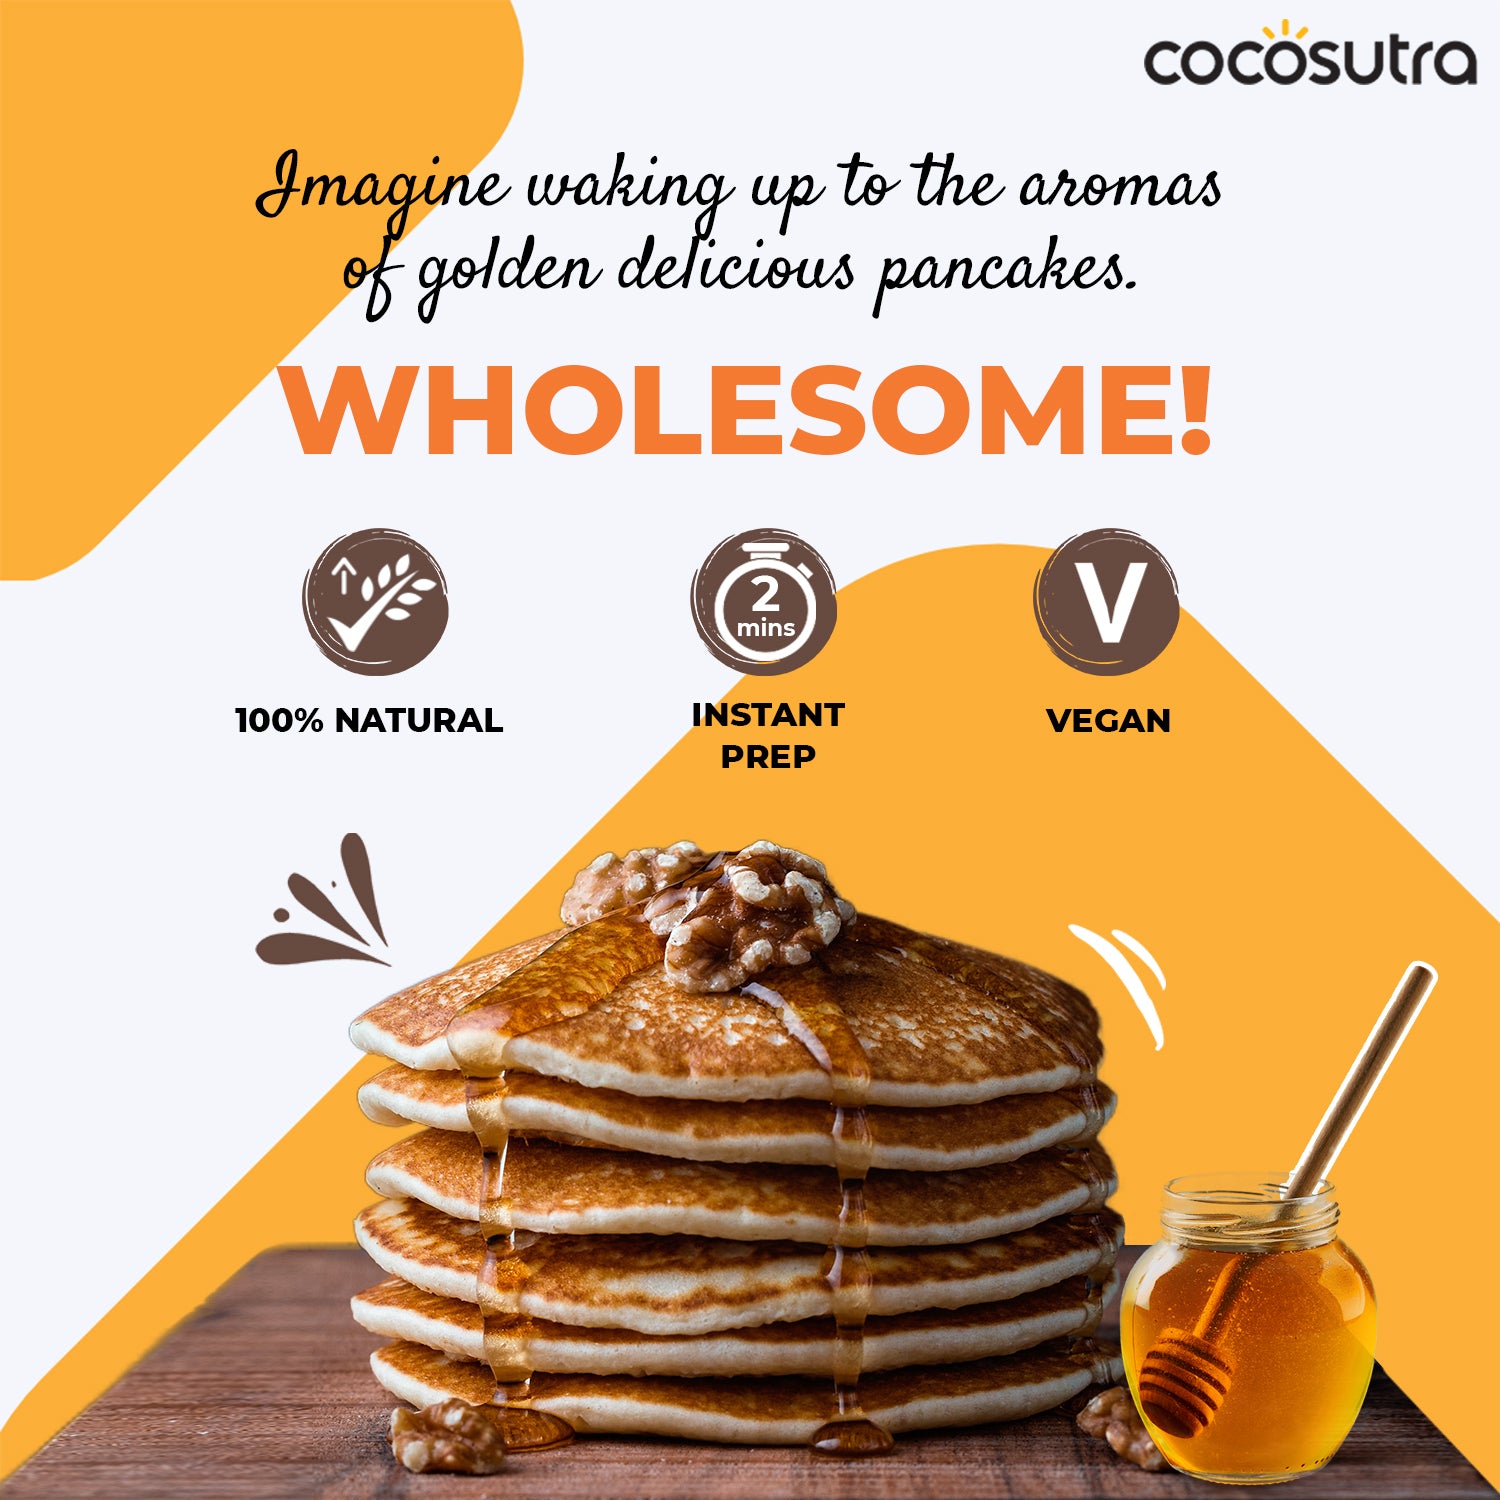 Cocosutra Original Pancake Mix Benefits